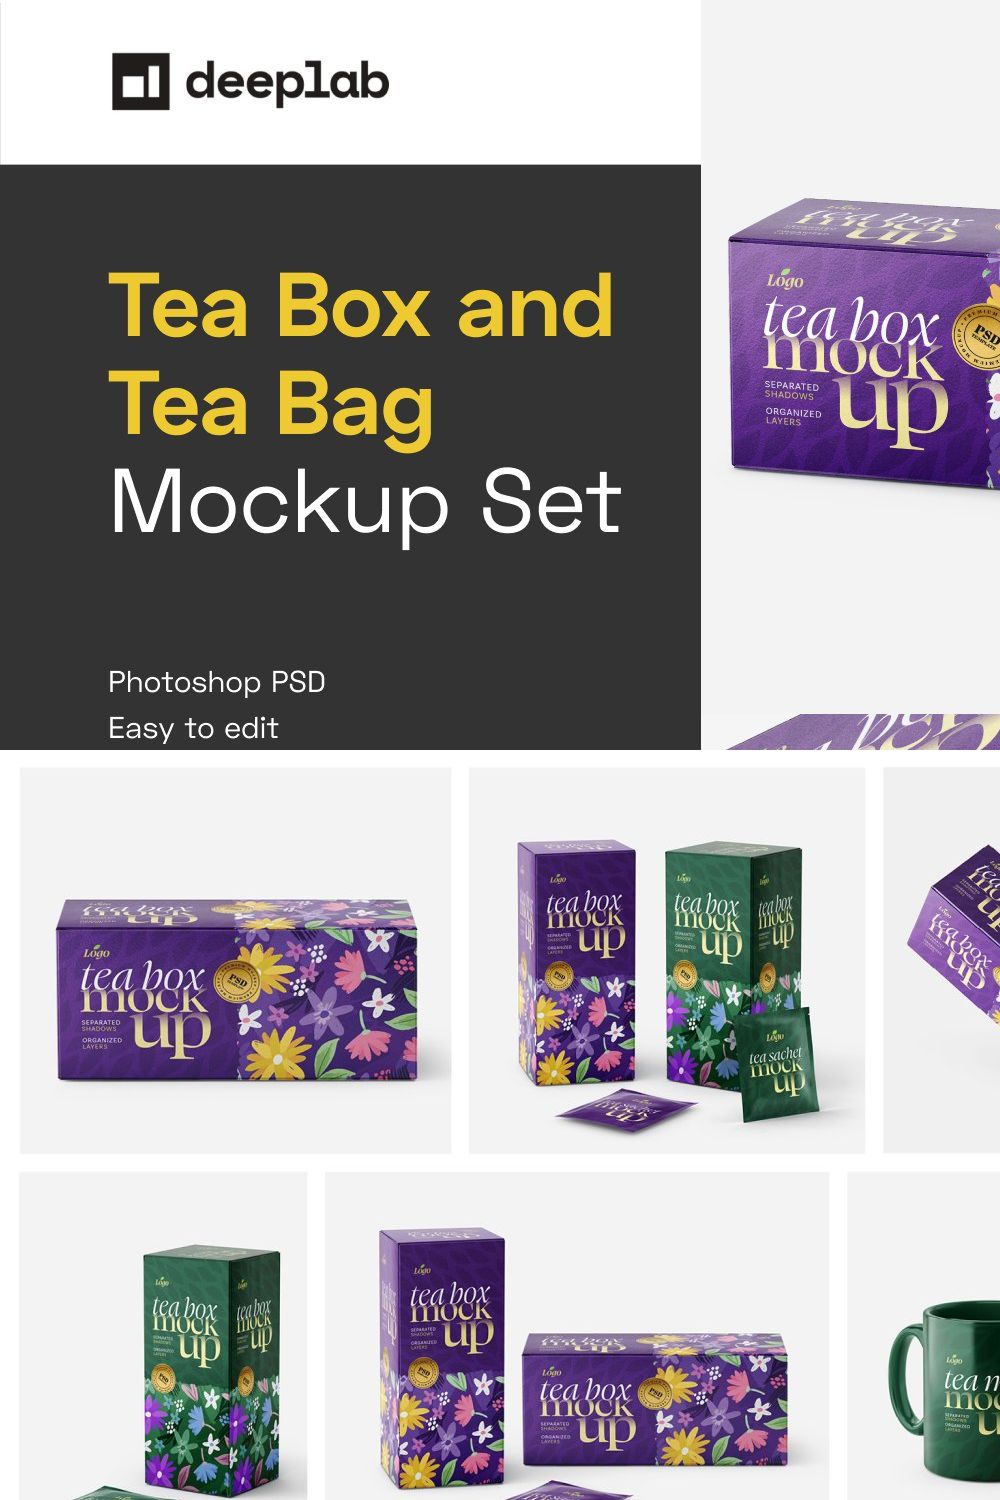 Tea Box and Tea Bag Mockup Set pinterest preview image.